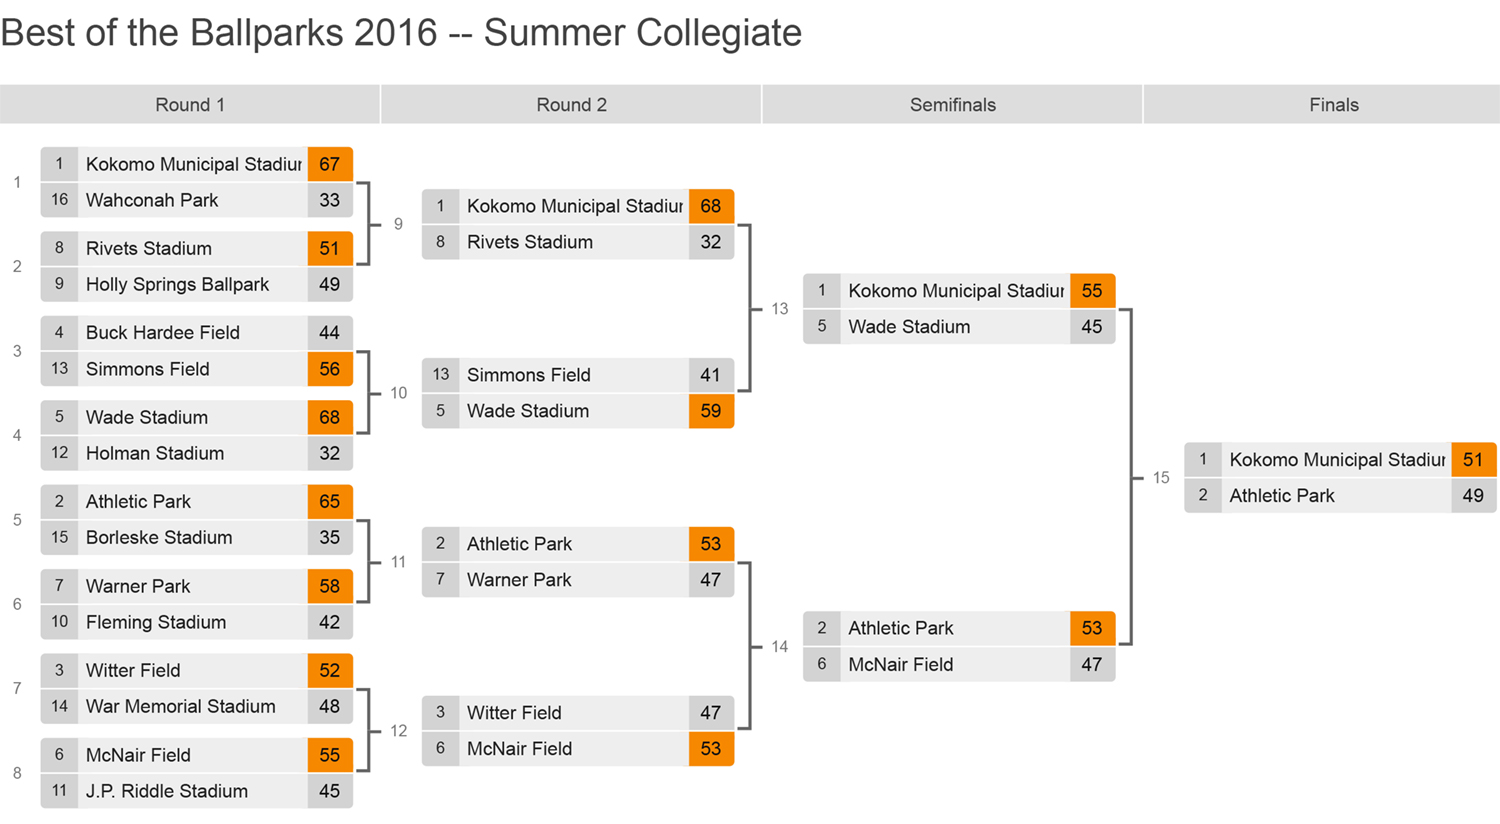 Best of the Ballparks 2016 Summer Collegiate Final